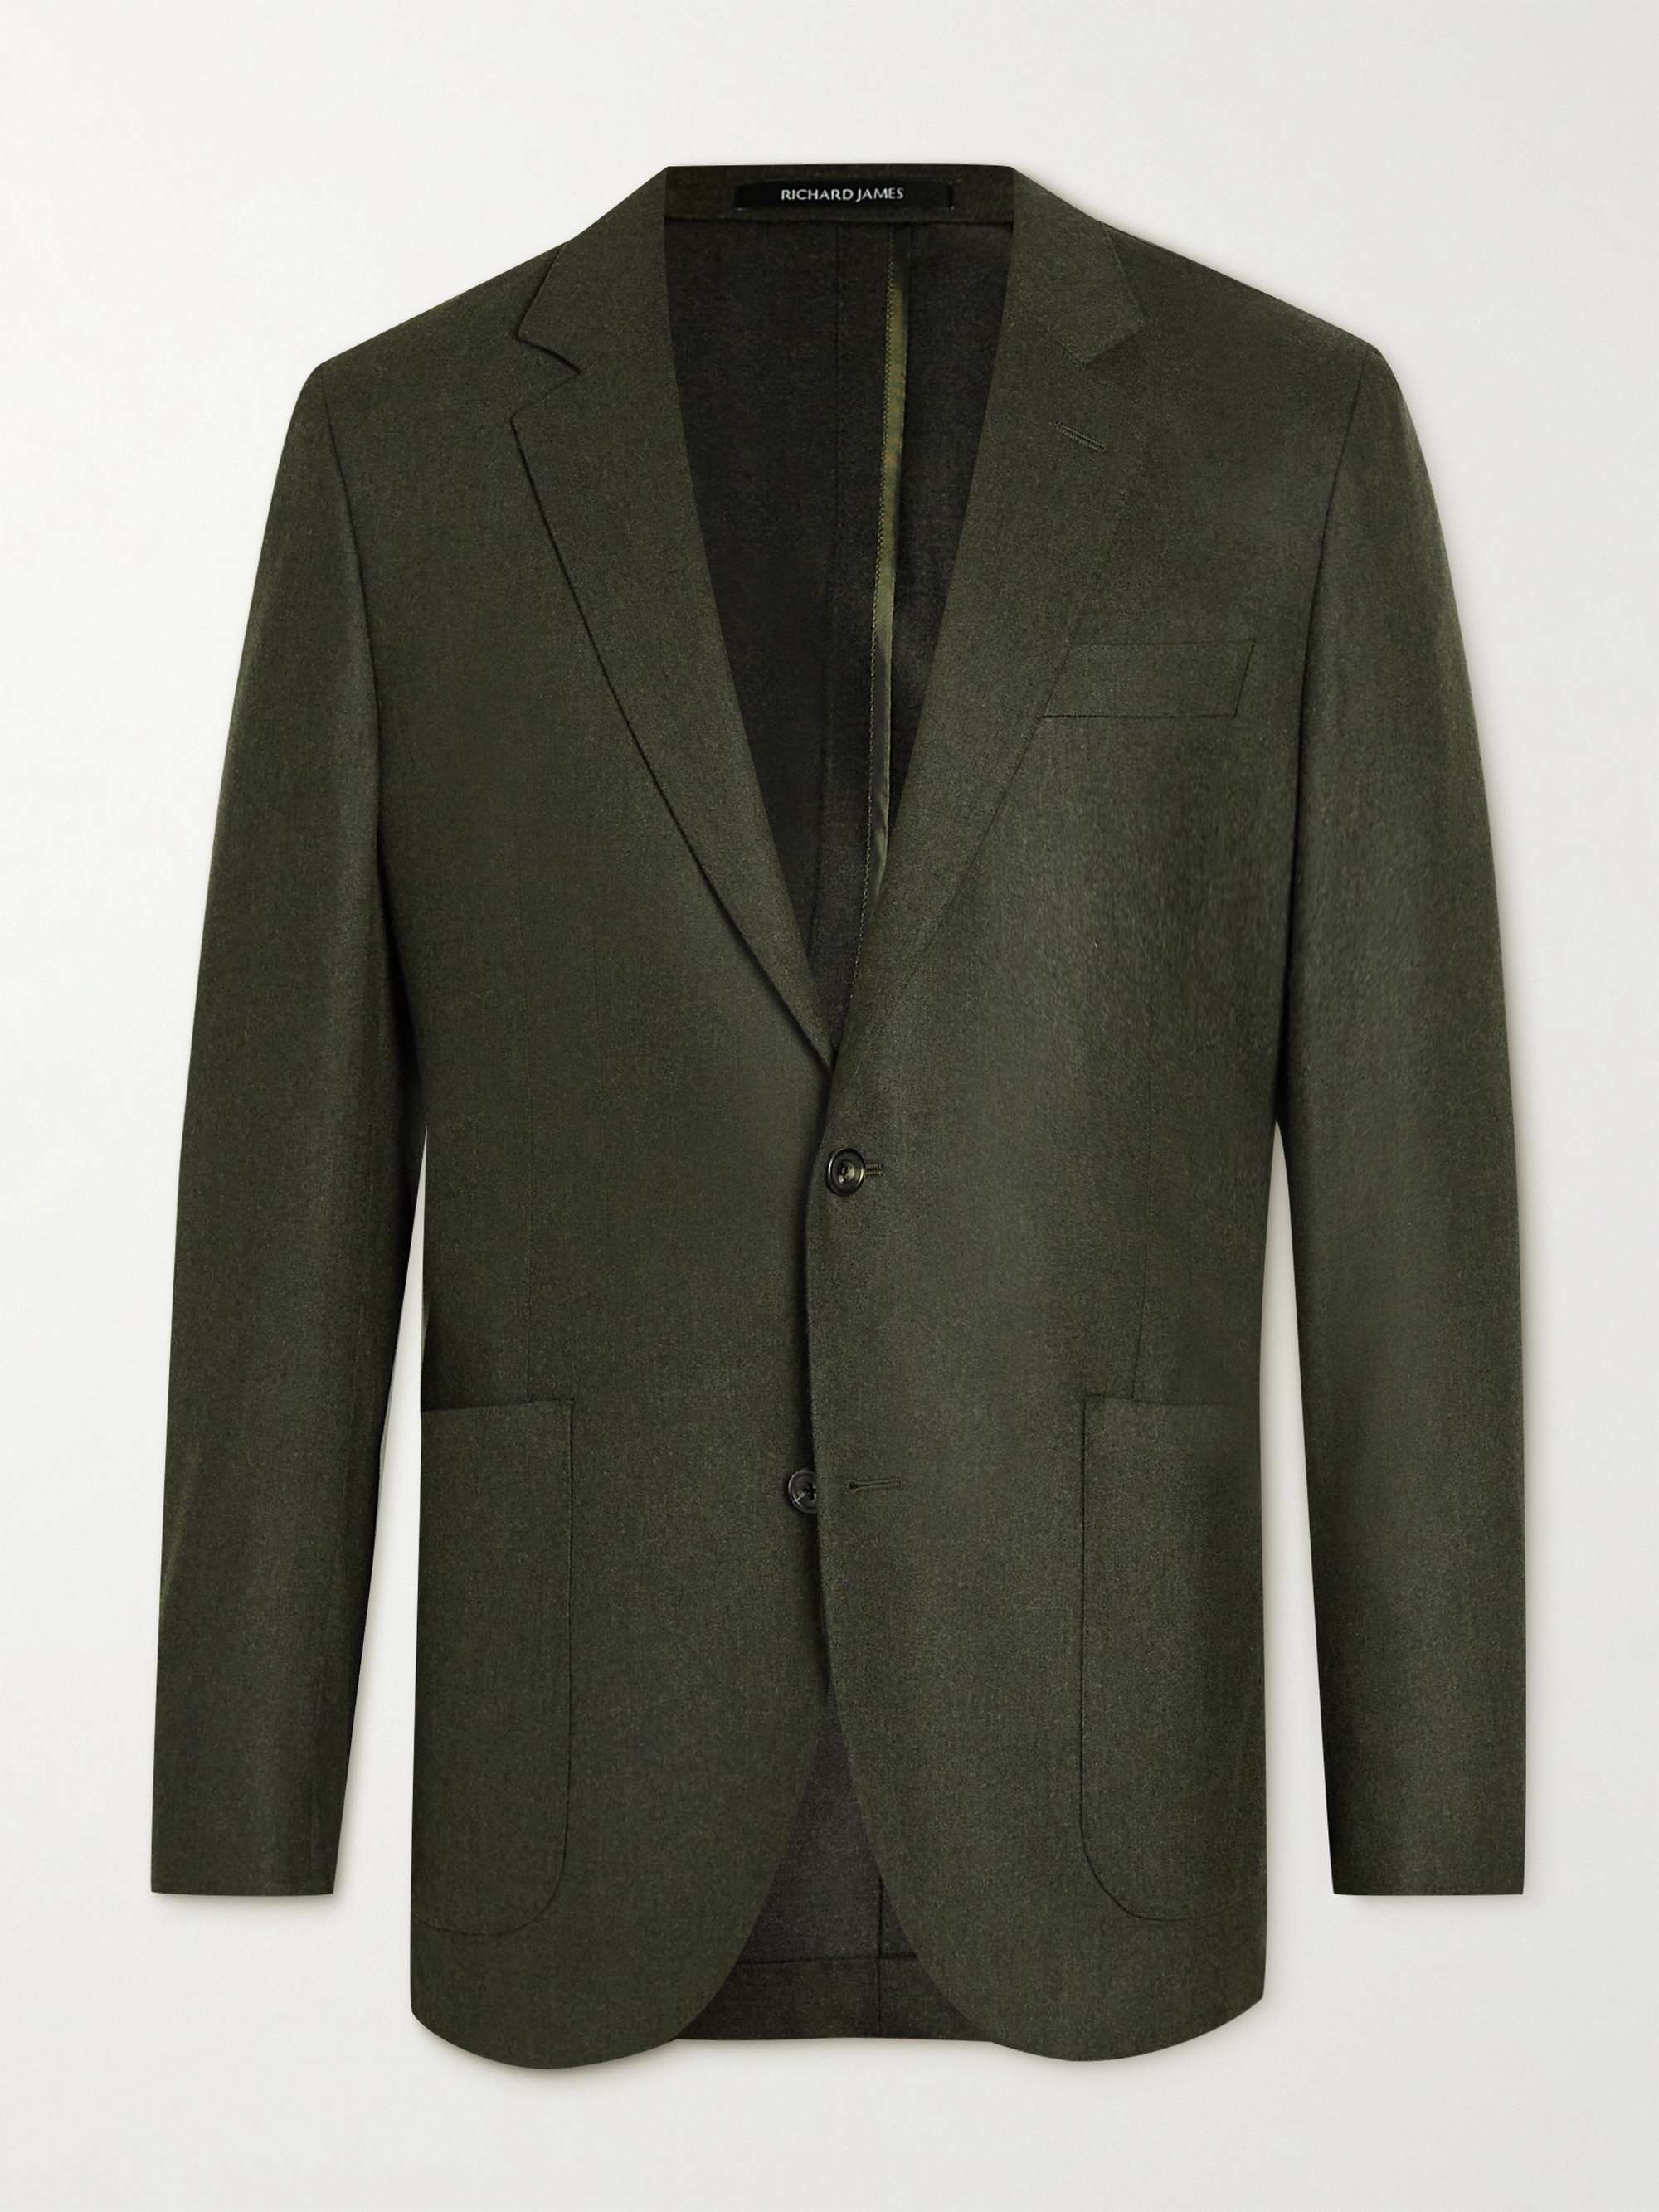 RICHARD JAMES Unstructured Wool Suit Jacket